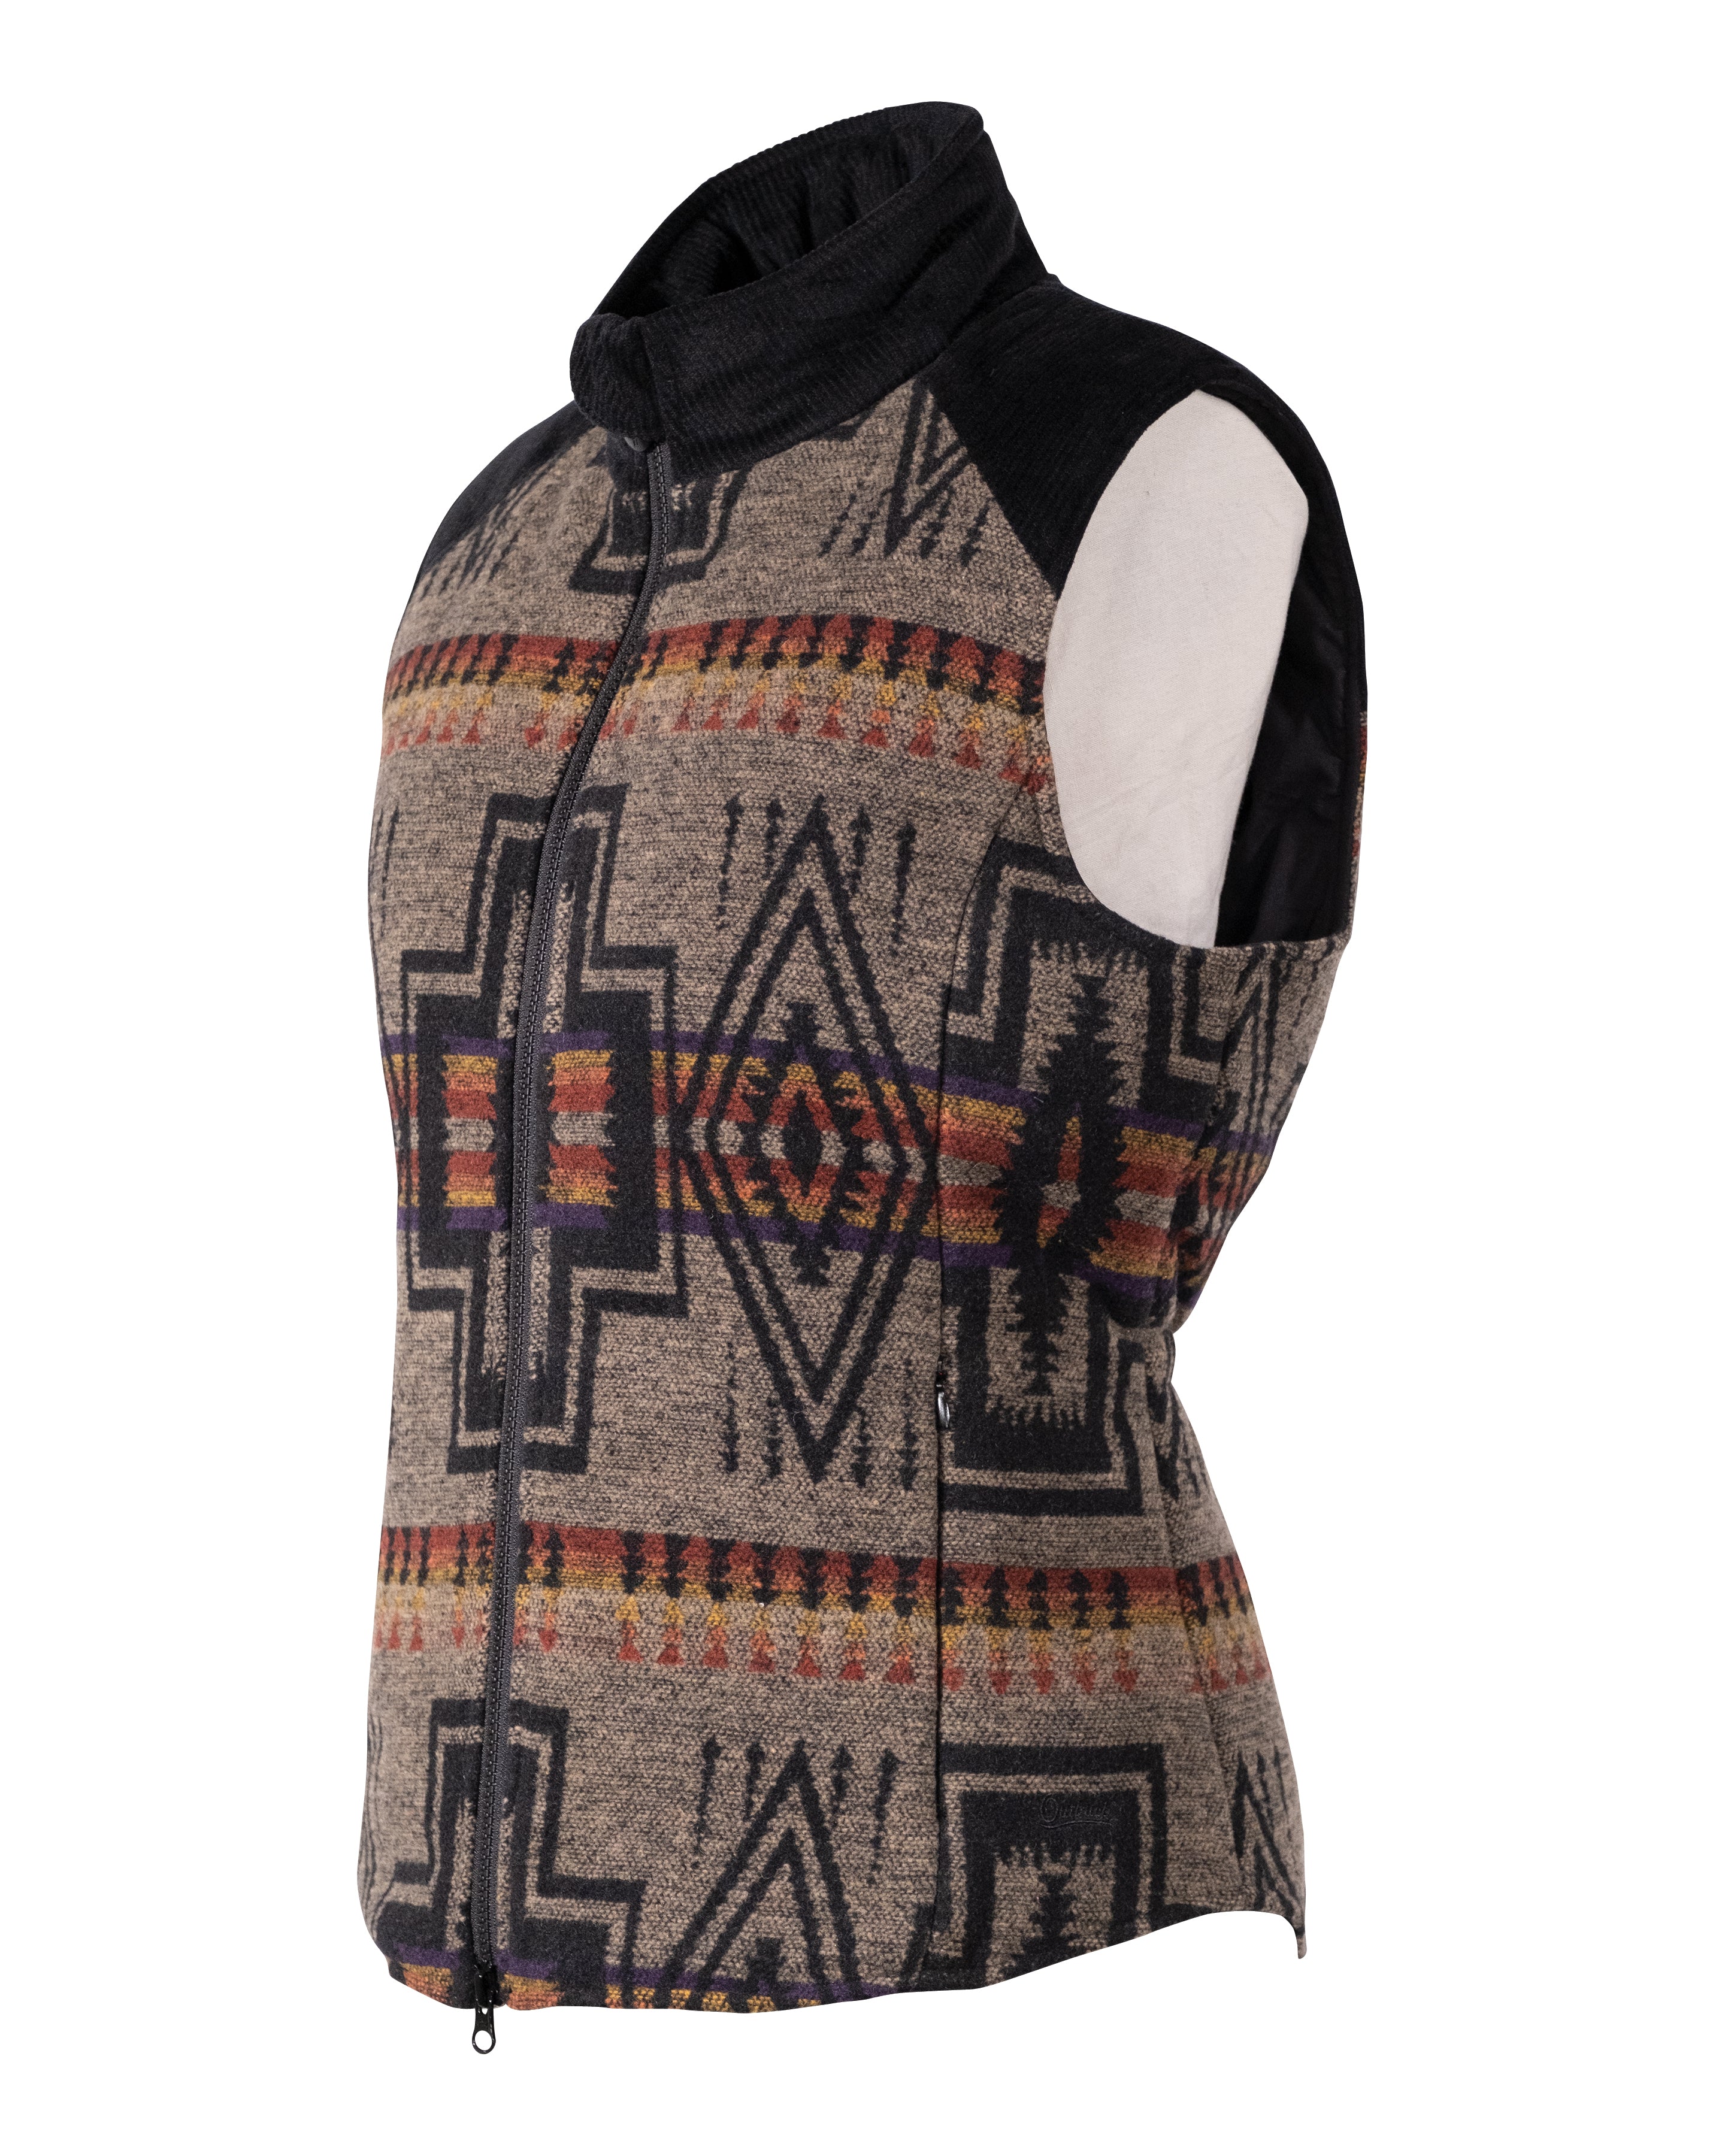 Outback Traders Maybelle Vest